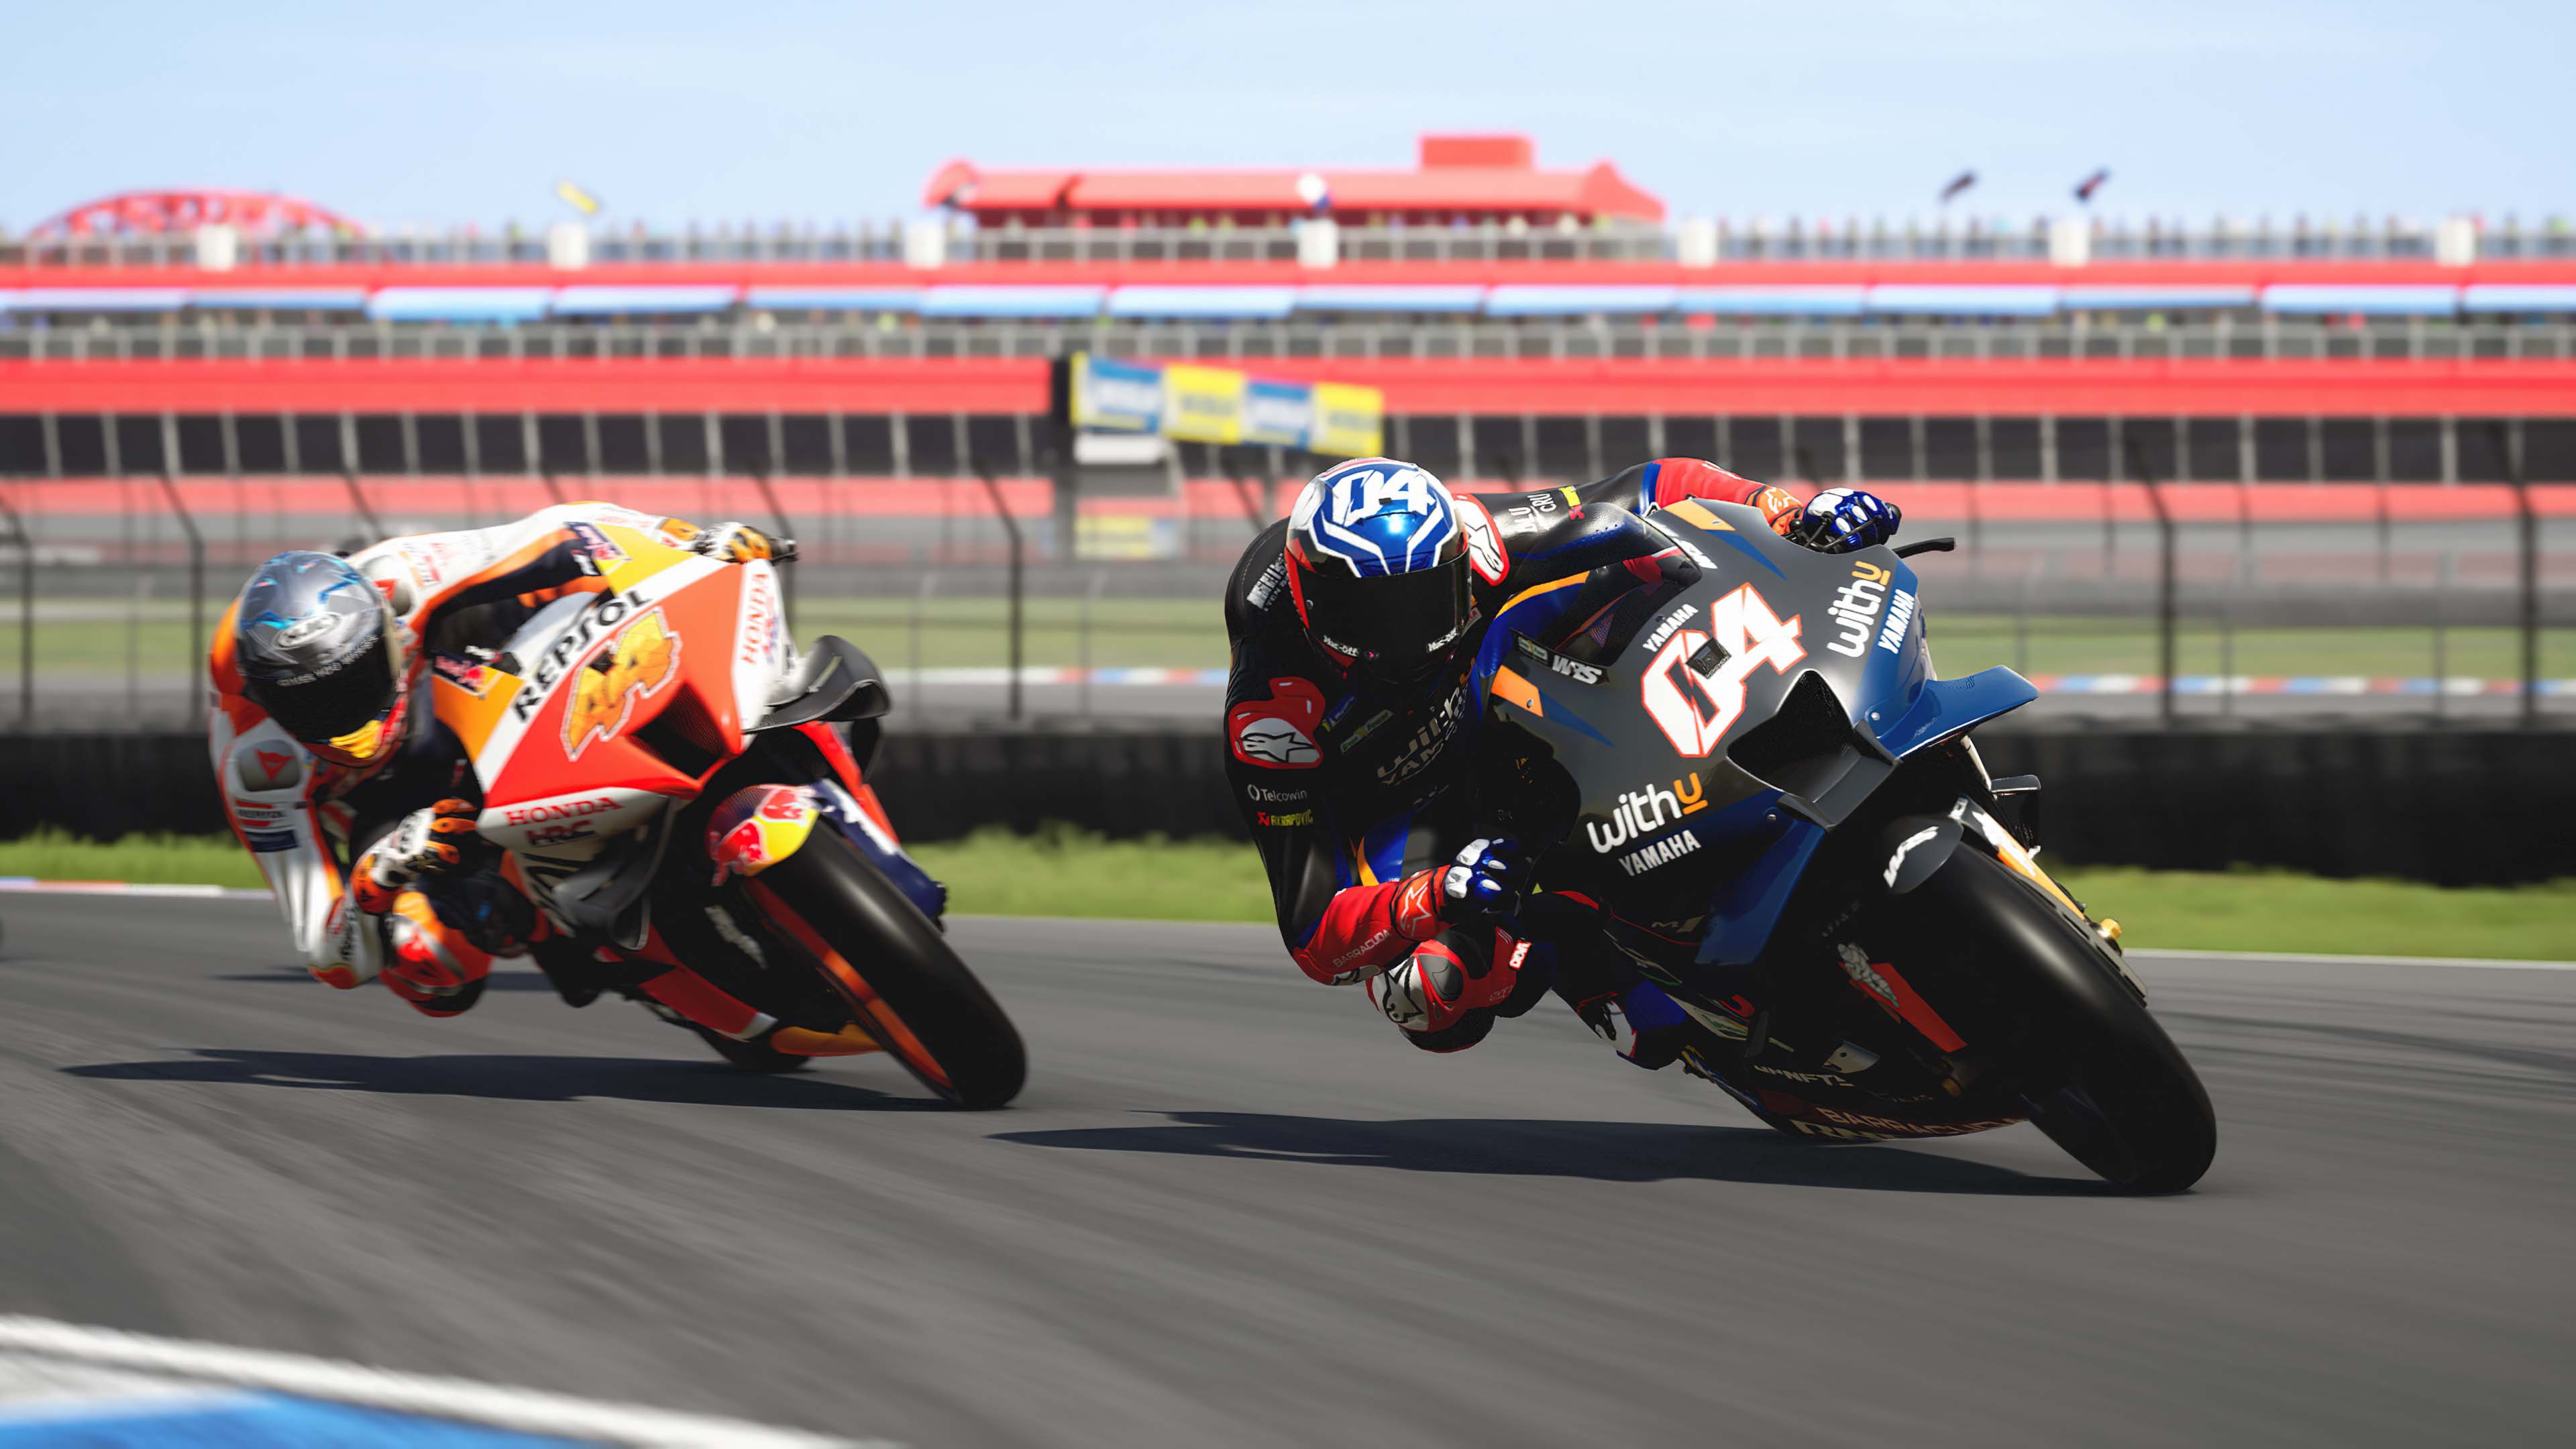 MotoGP 22 game looks like fun in split-screen multiplayer footage